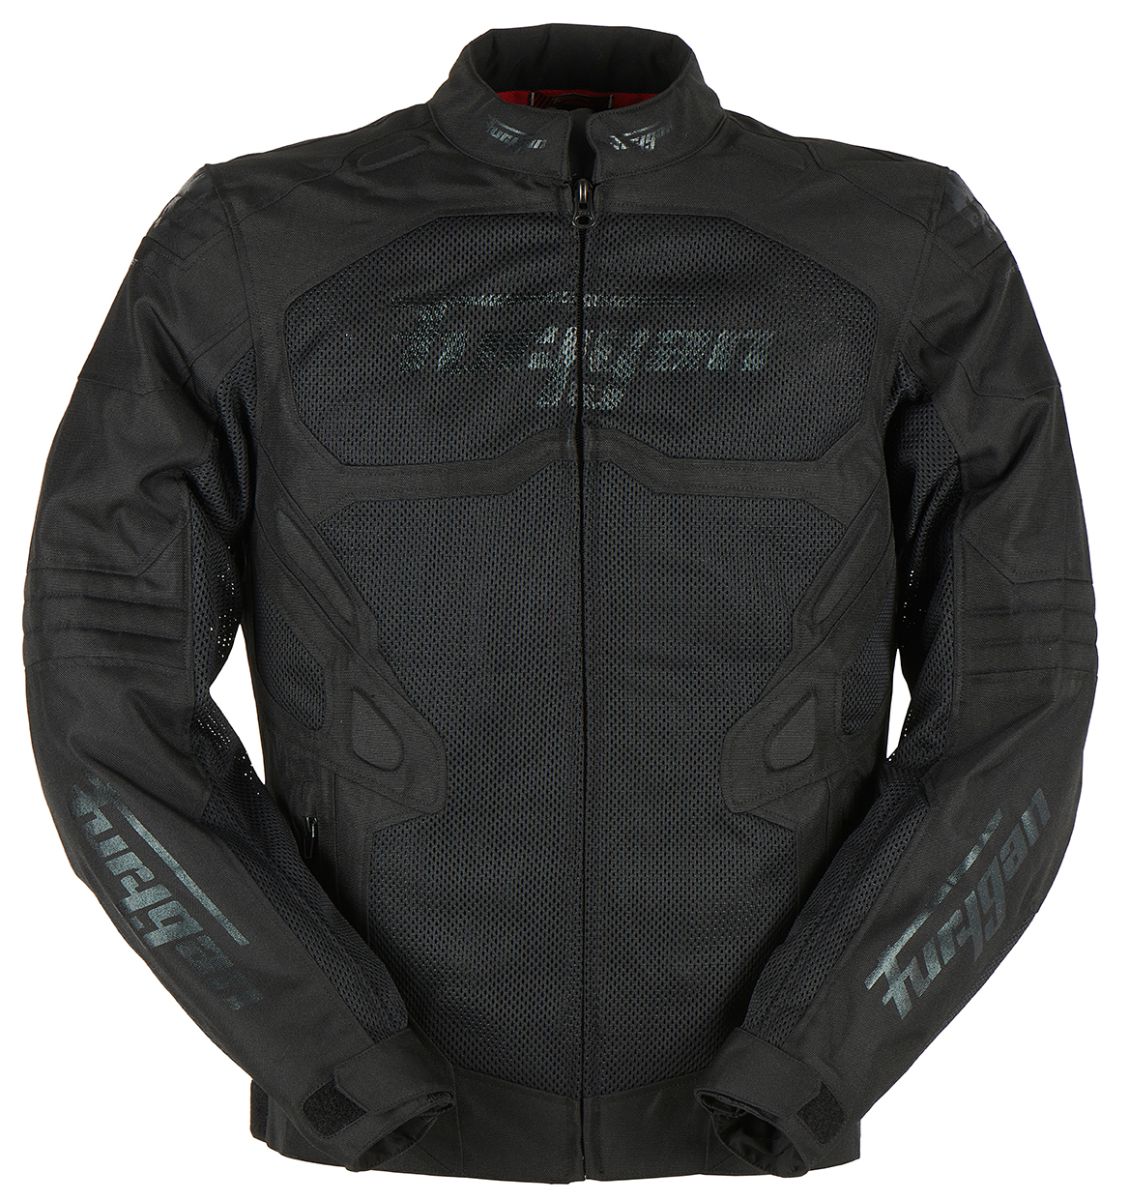 Image of Furygan Atom Vented Evo Jacket Black Size M EN